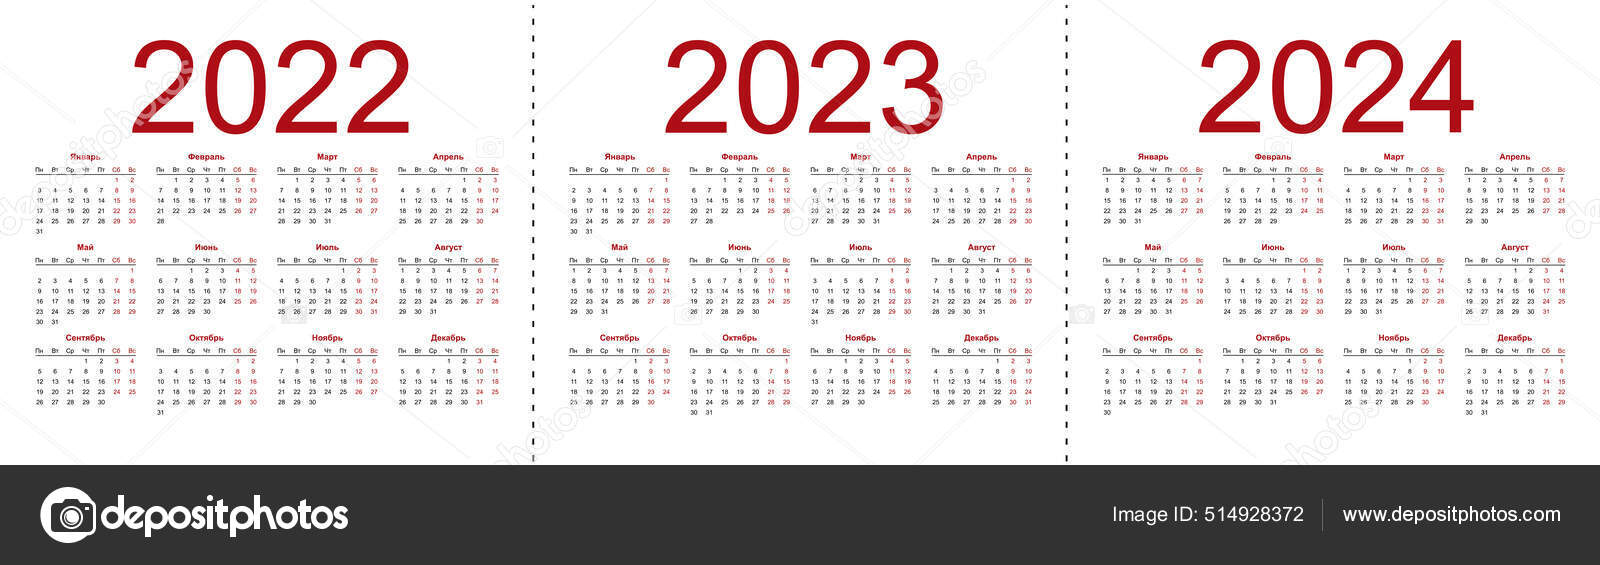 Calendar Grid 2022 2023 2024 Years Simple Horizontal Template Russian